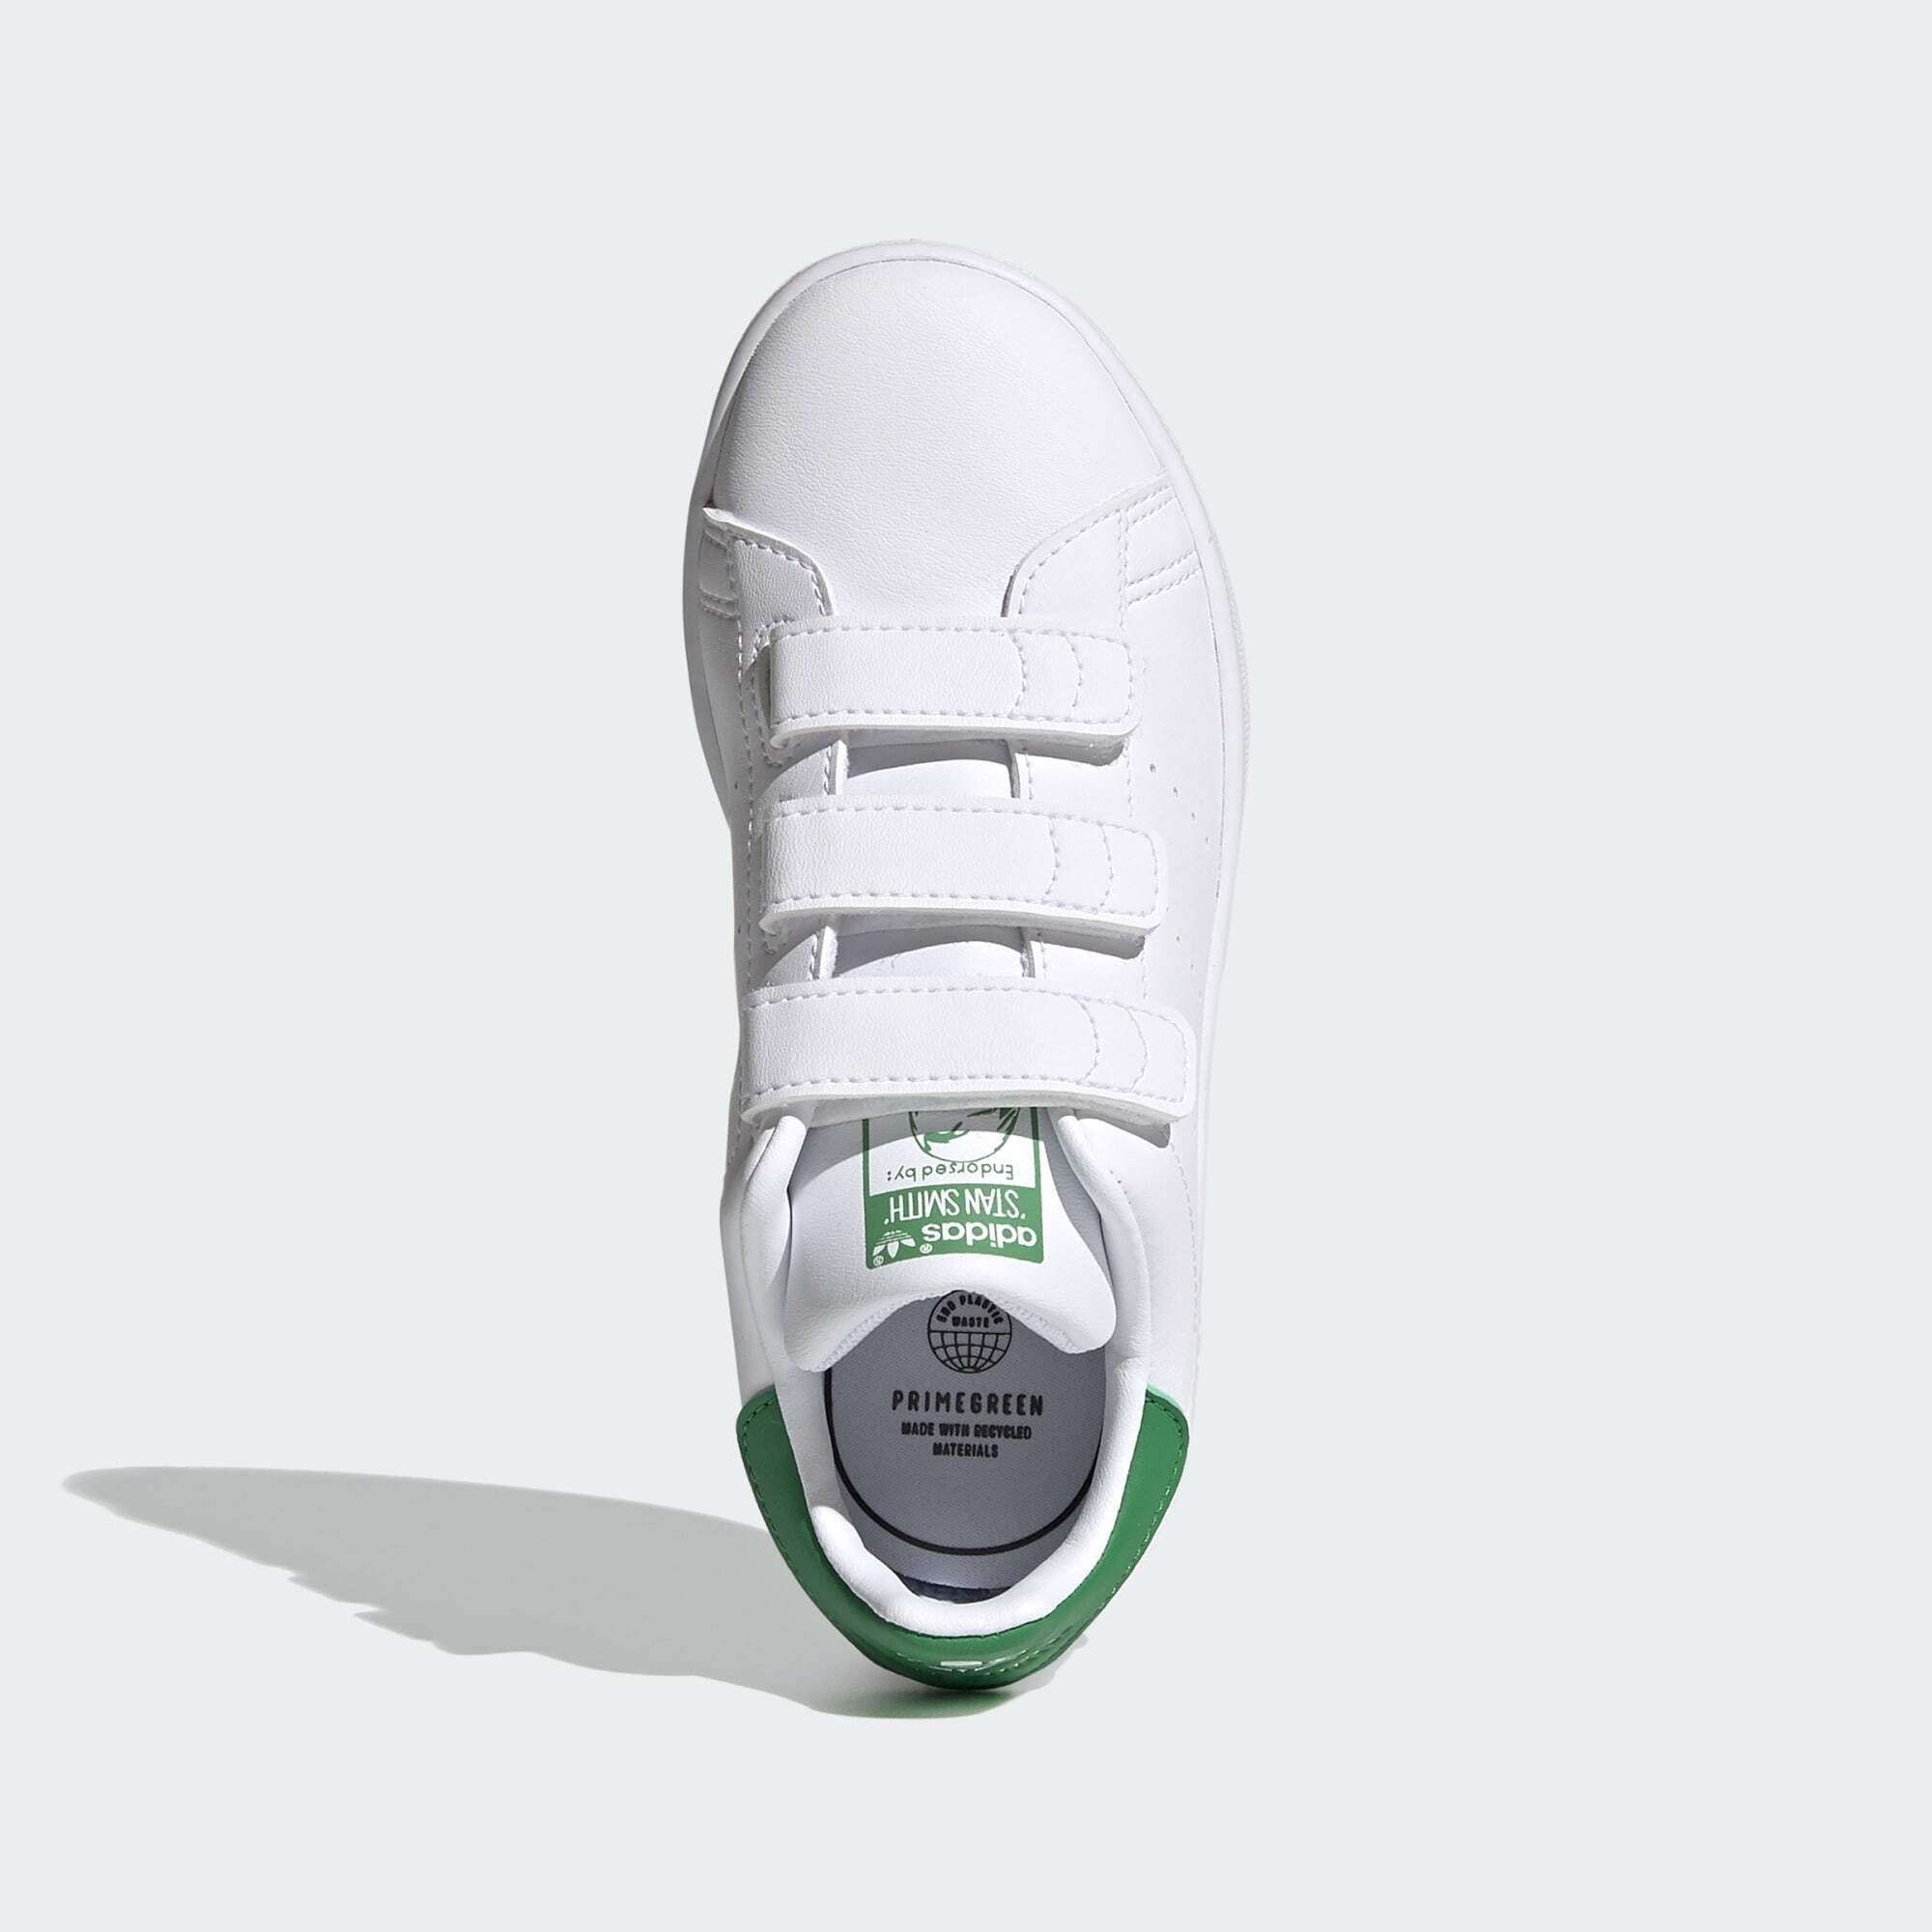 SMITH adidas SCHUH Sneaker / STAN White White Originals / Cloud Cloud Green